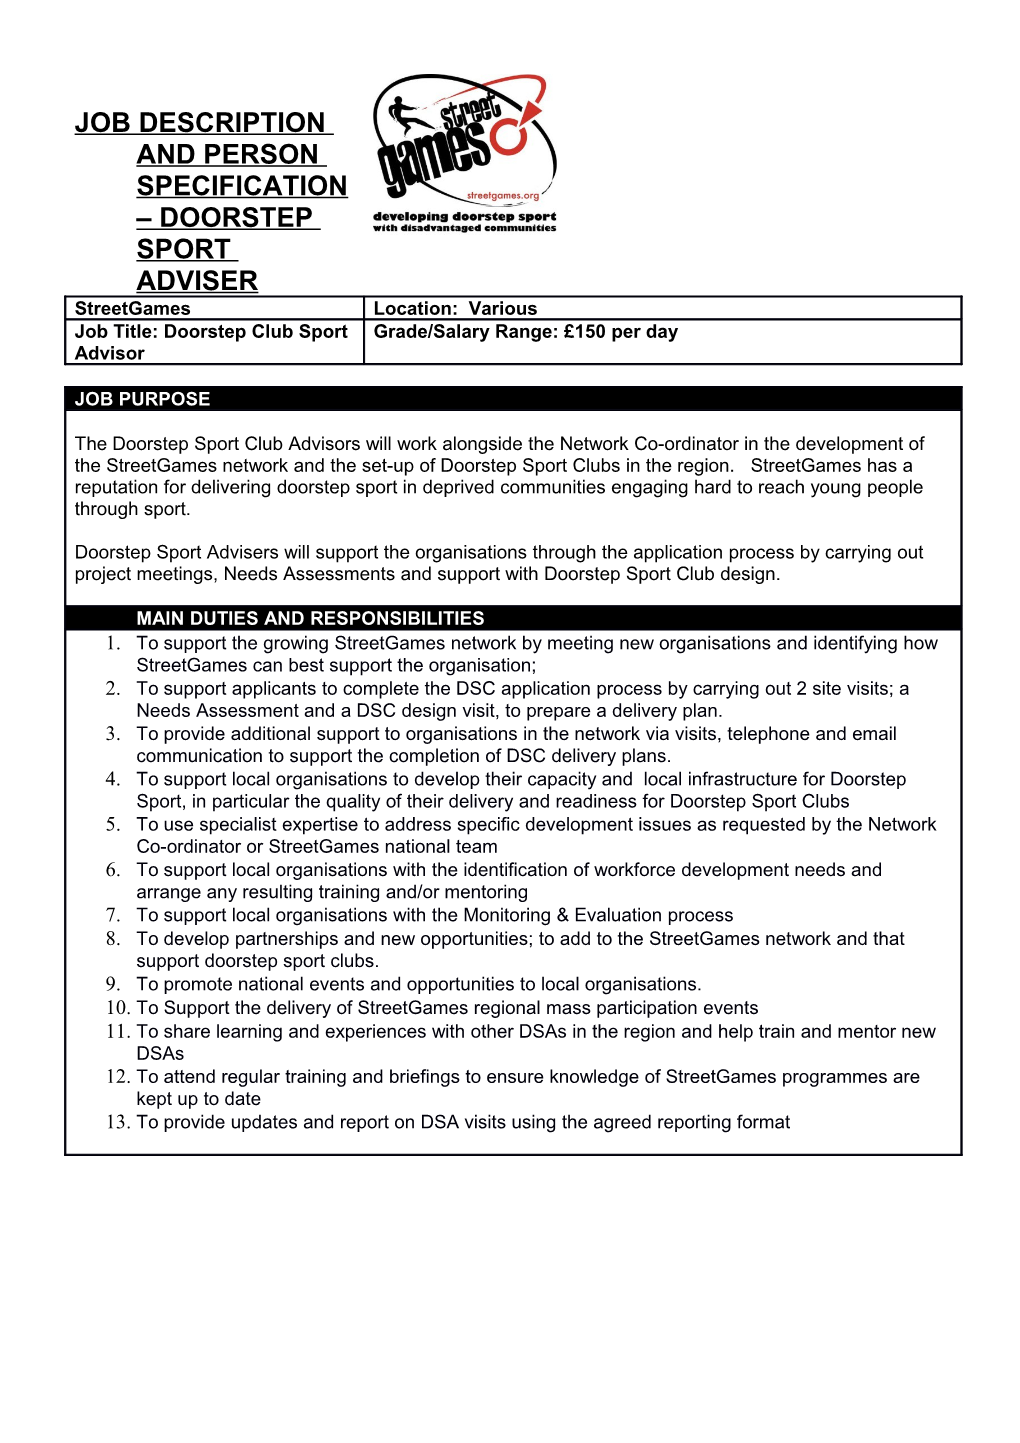 Job Description and Person Specification Doorstep Sport Adviser